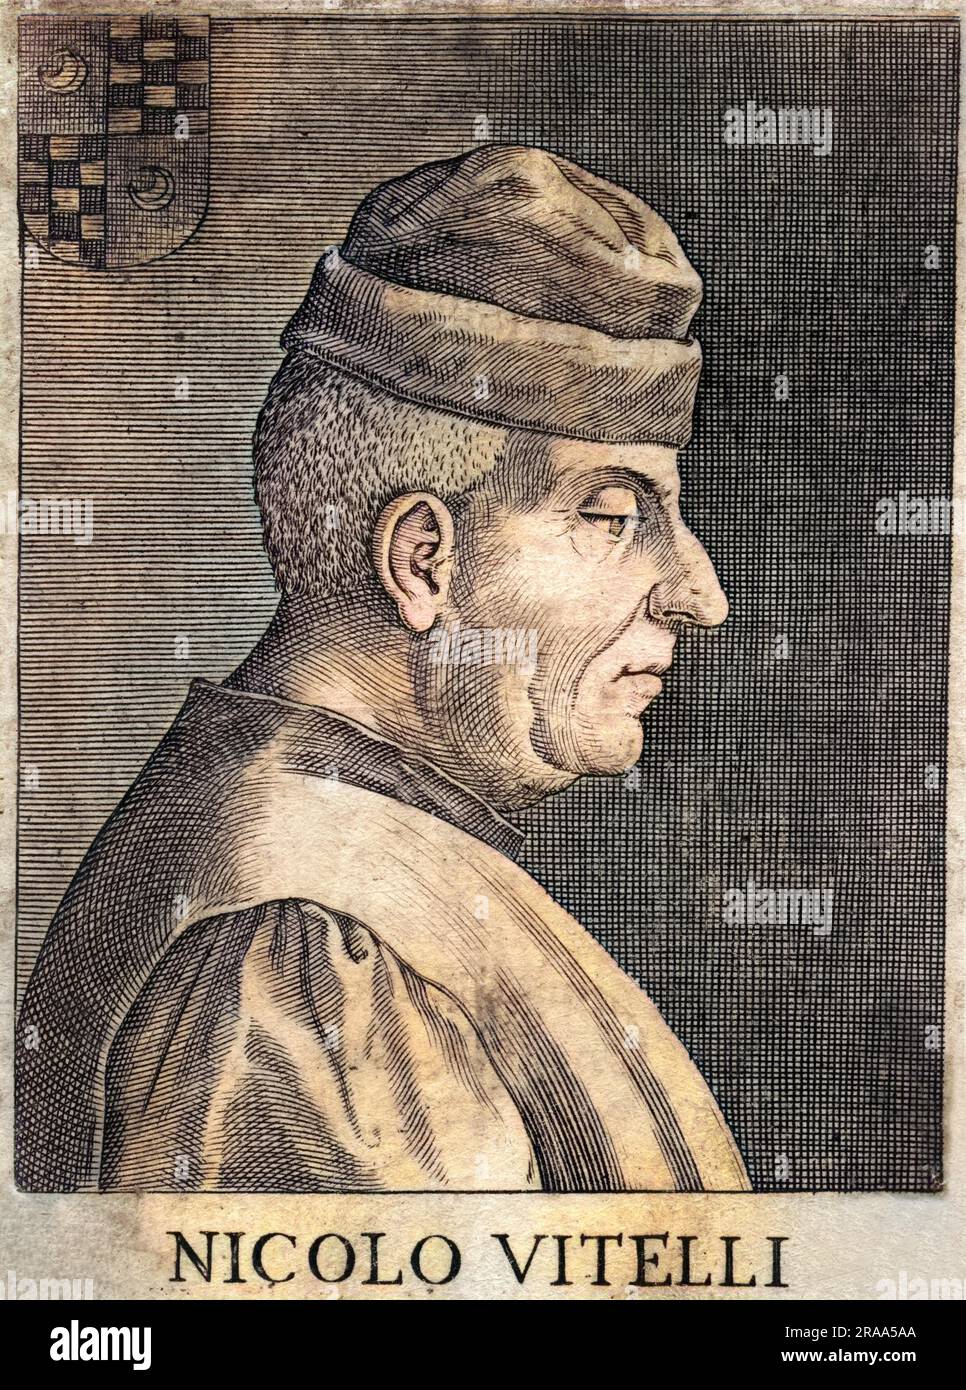 NICOLO VITELLI noble italien, membre de la famille qui a dirigé Citta di Castello Date: VERS 1510 Banque D'Images